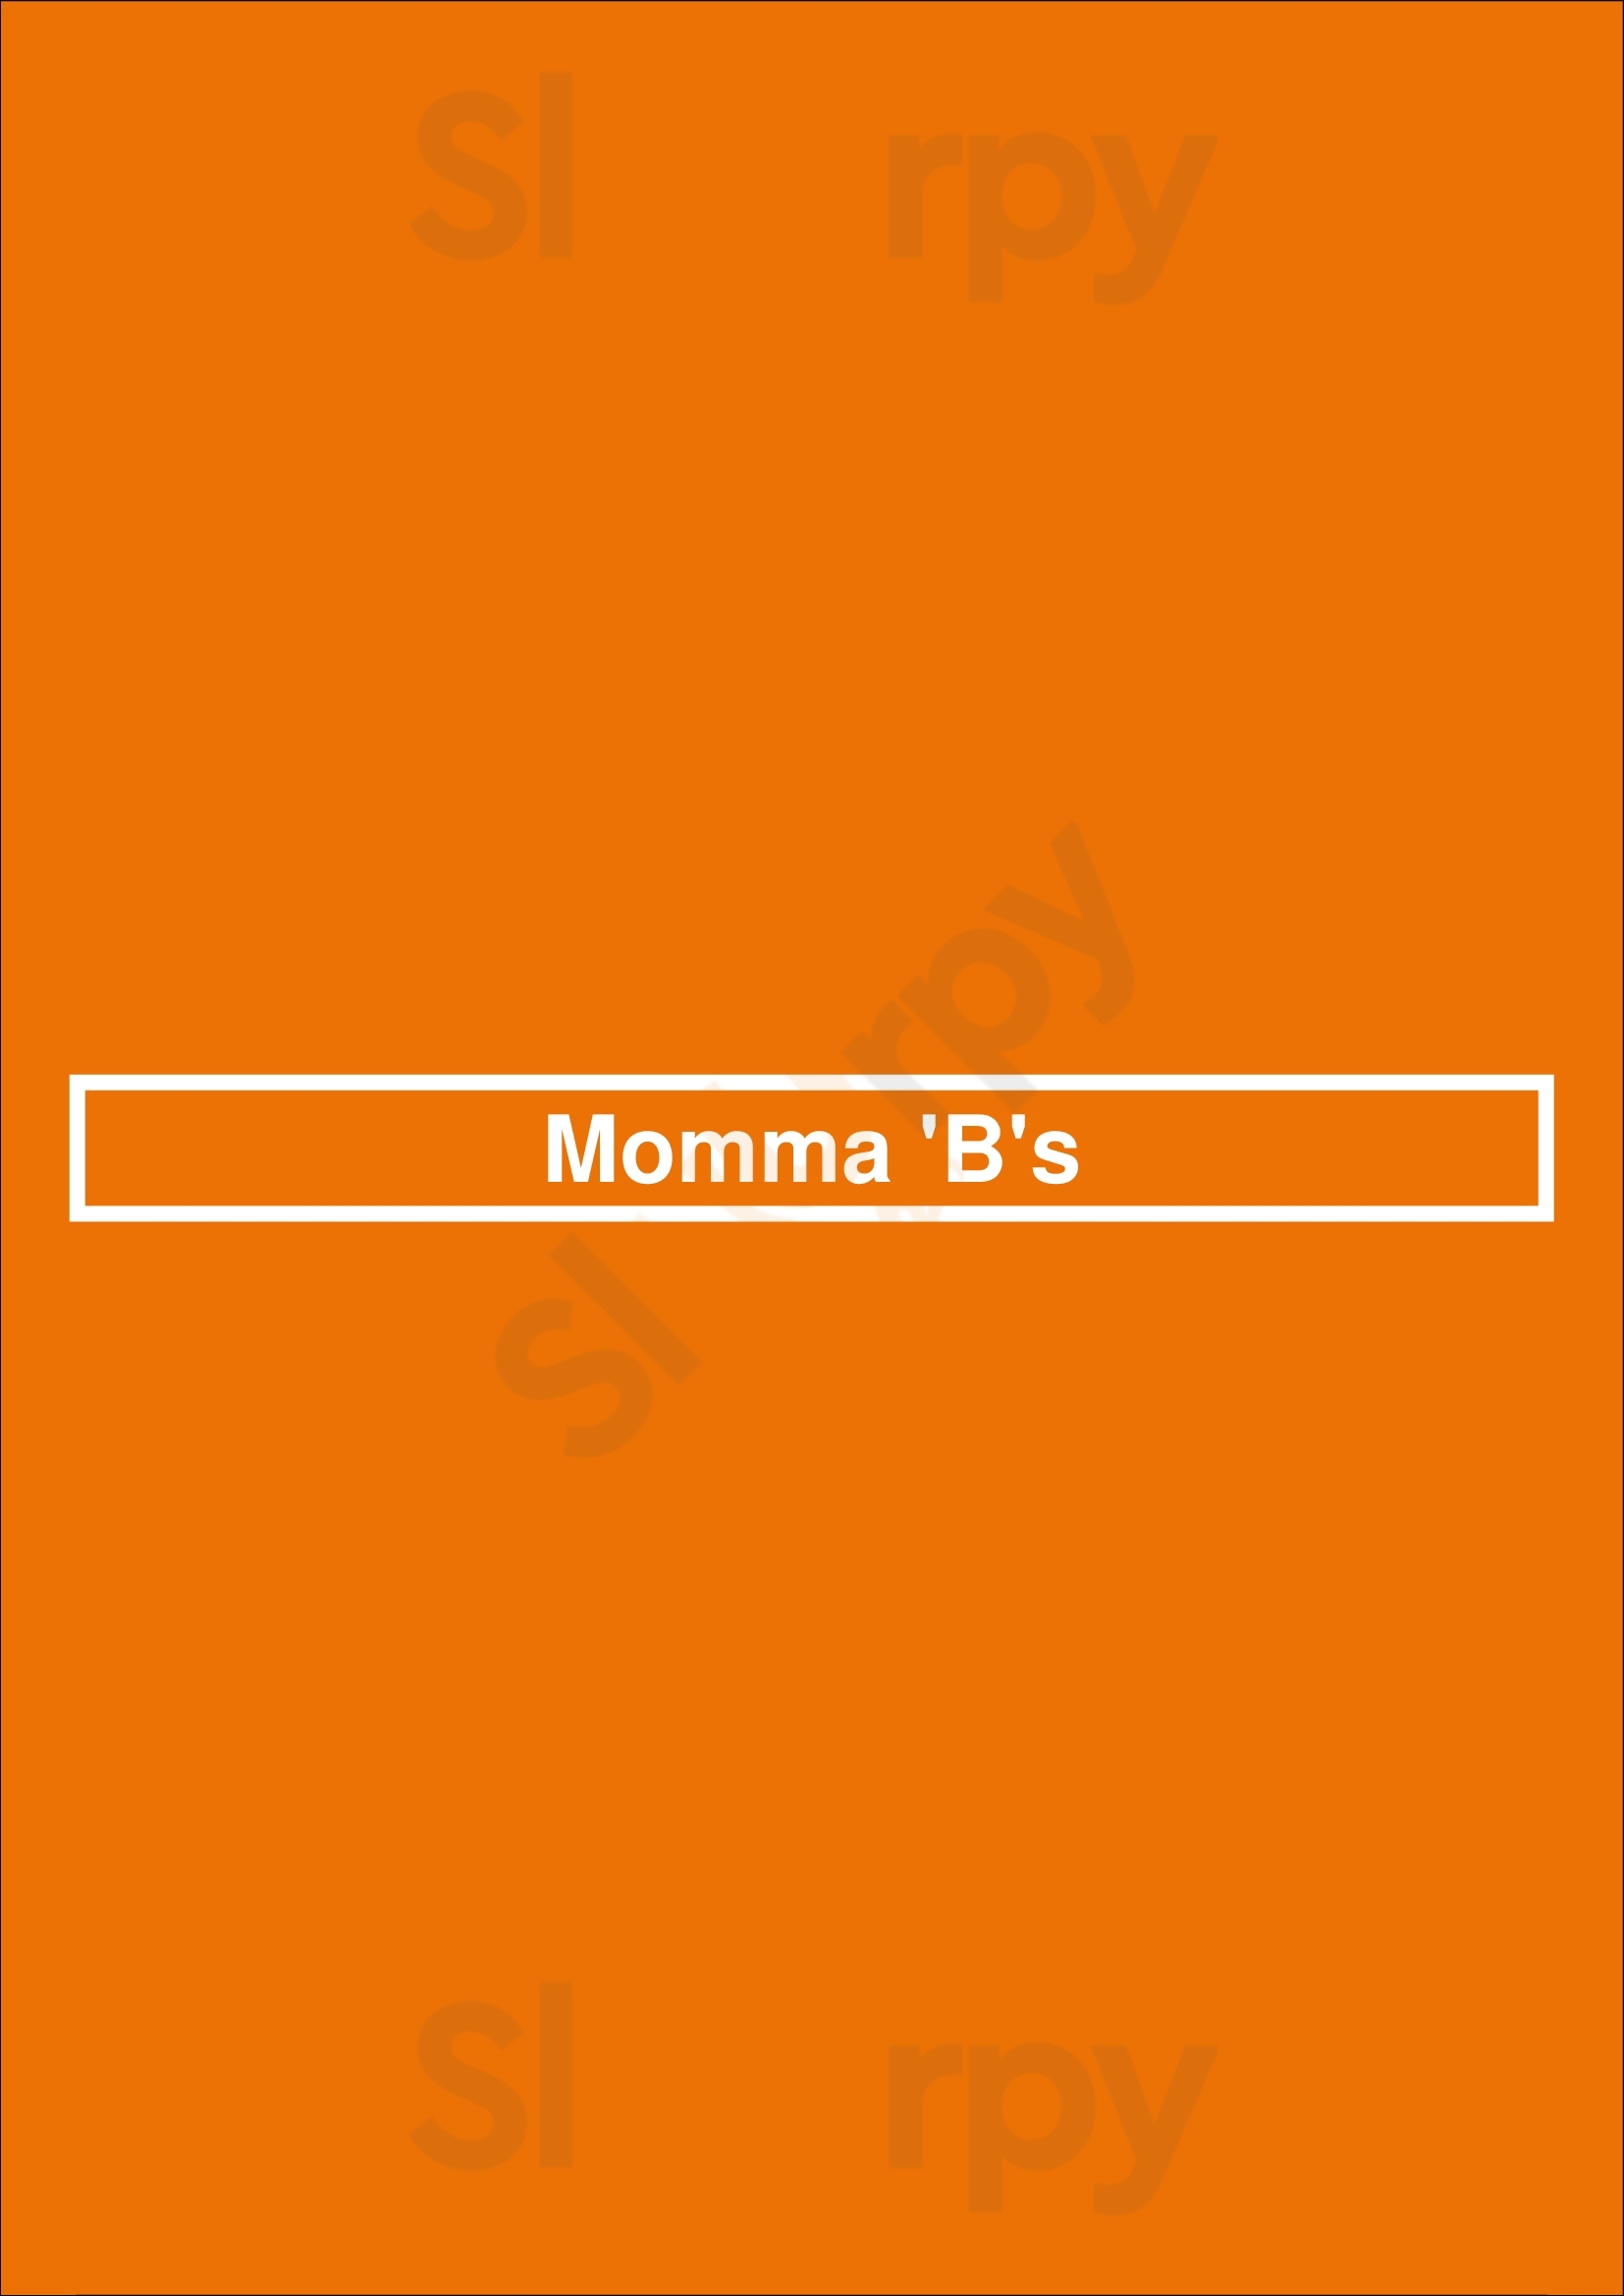 Momma 'b's Wythenshawe Menu - 1